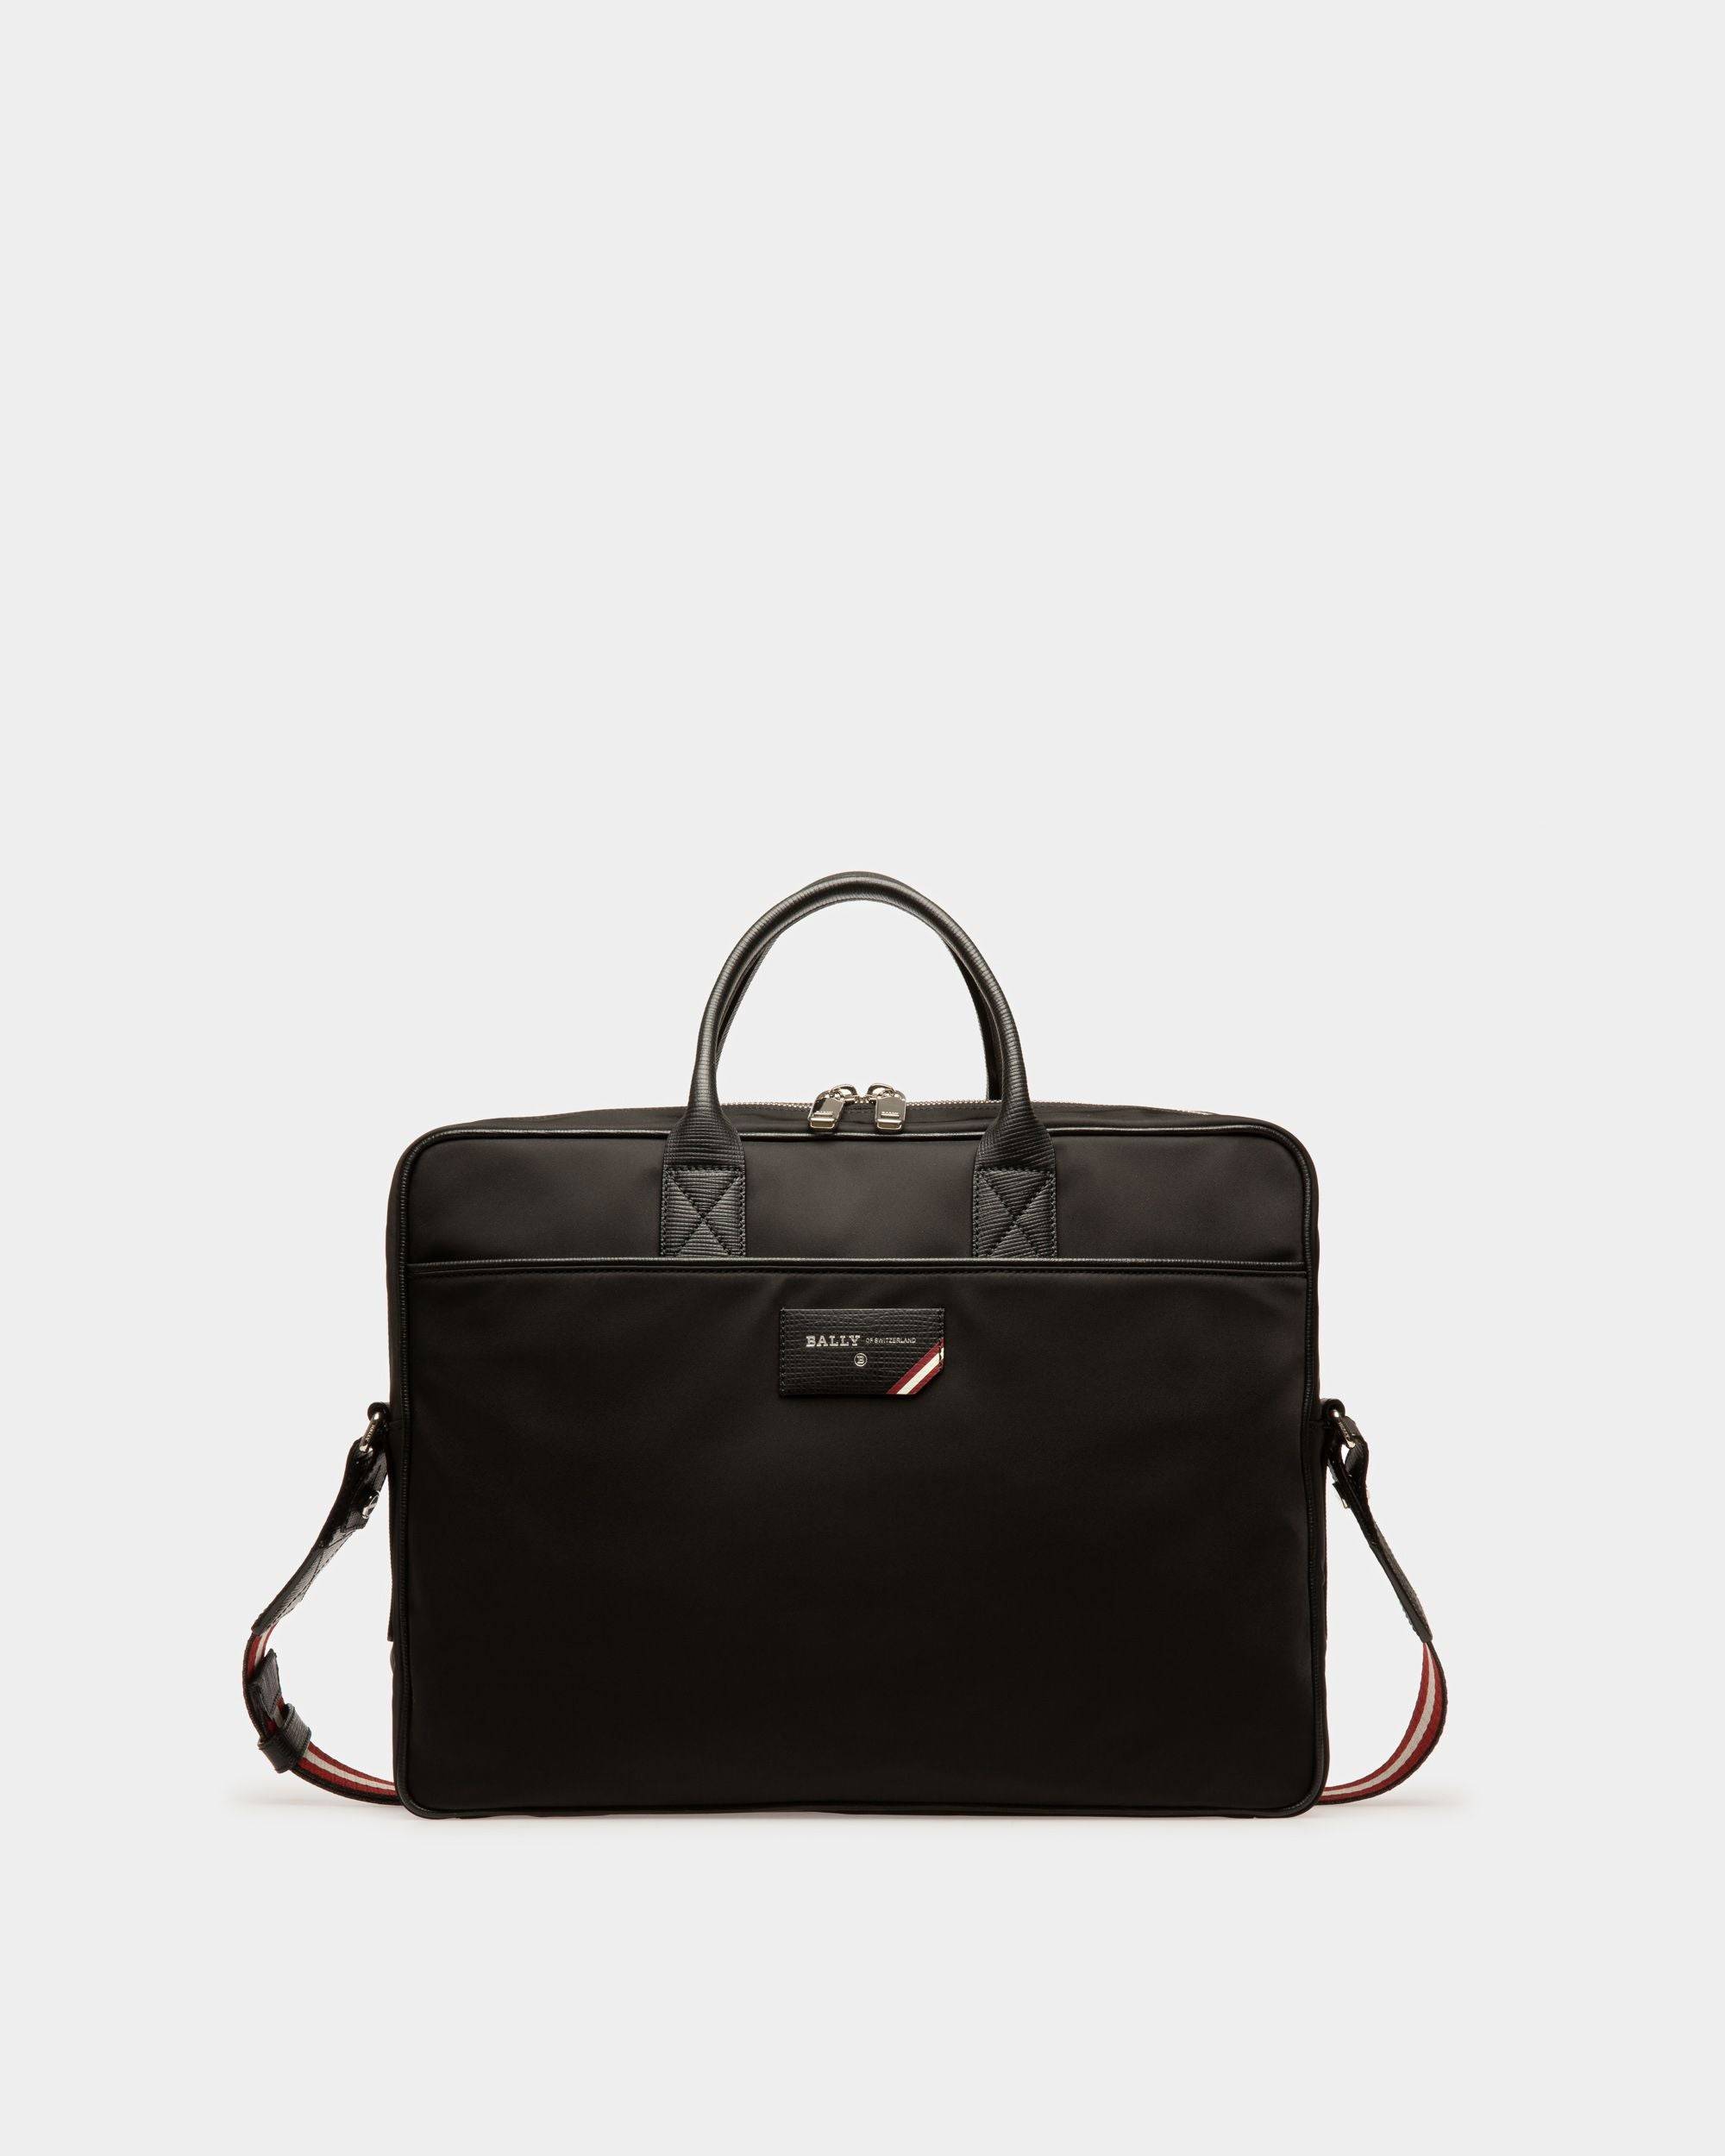 Faldy | Men's Business Bag | Black Leather | Bally | Still Life Front